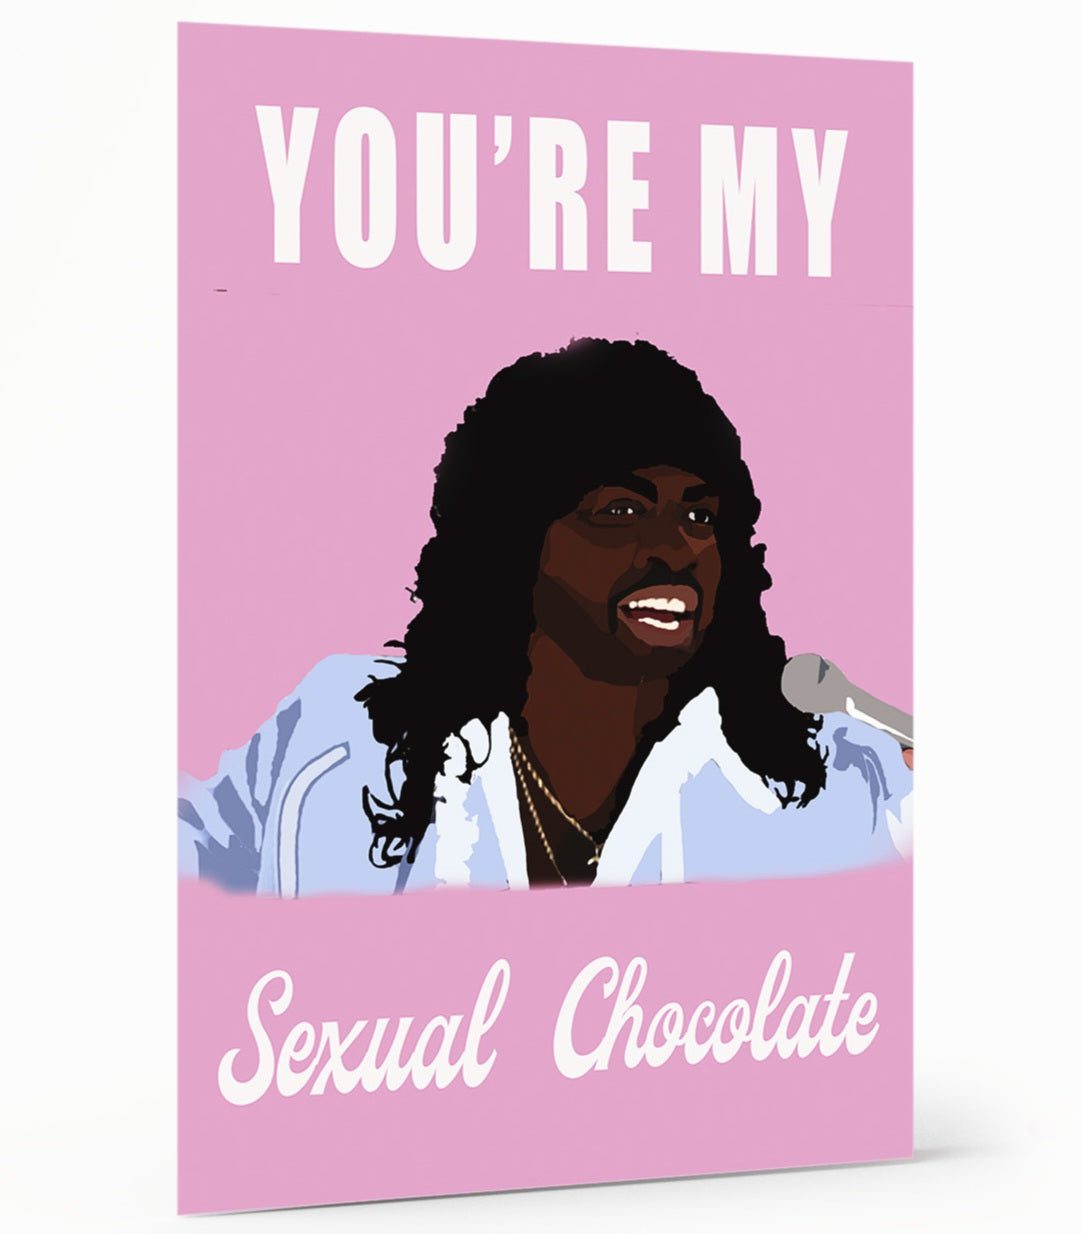 Sexual Chocolate Card